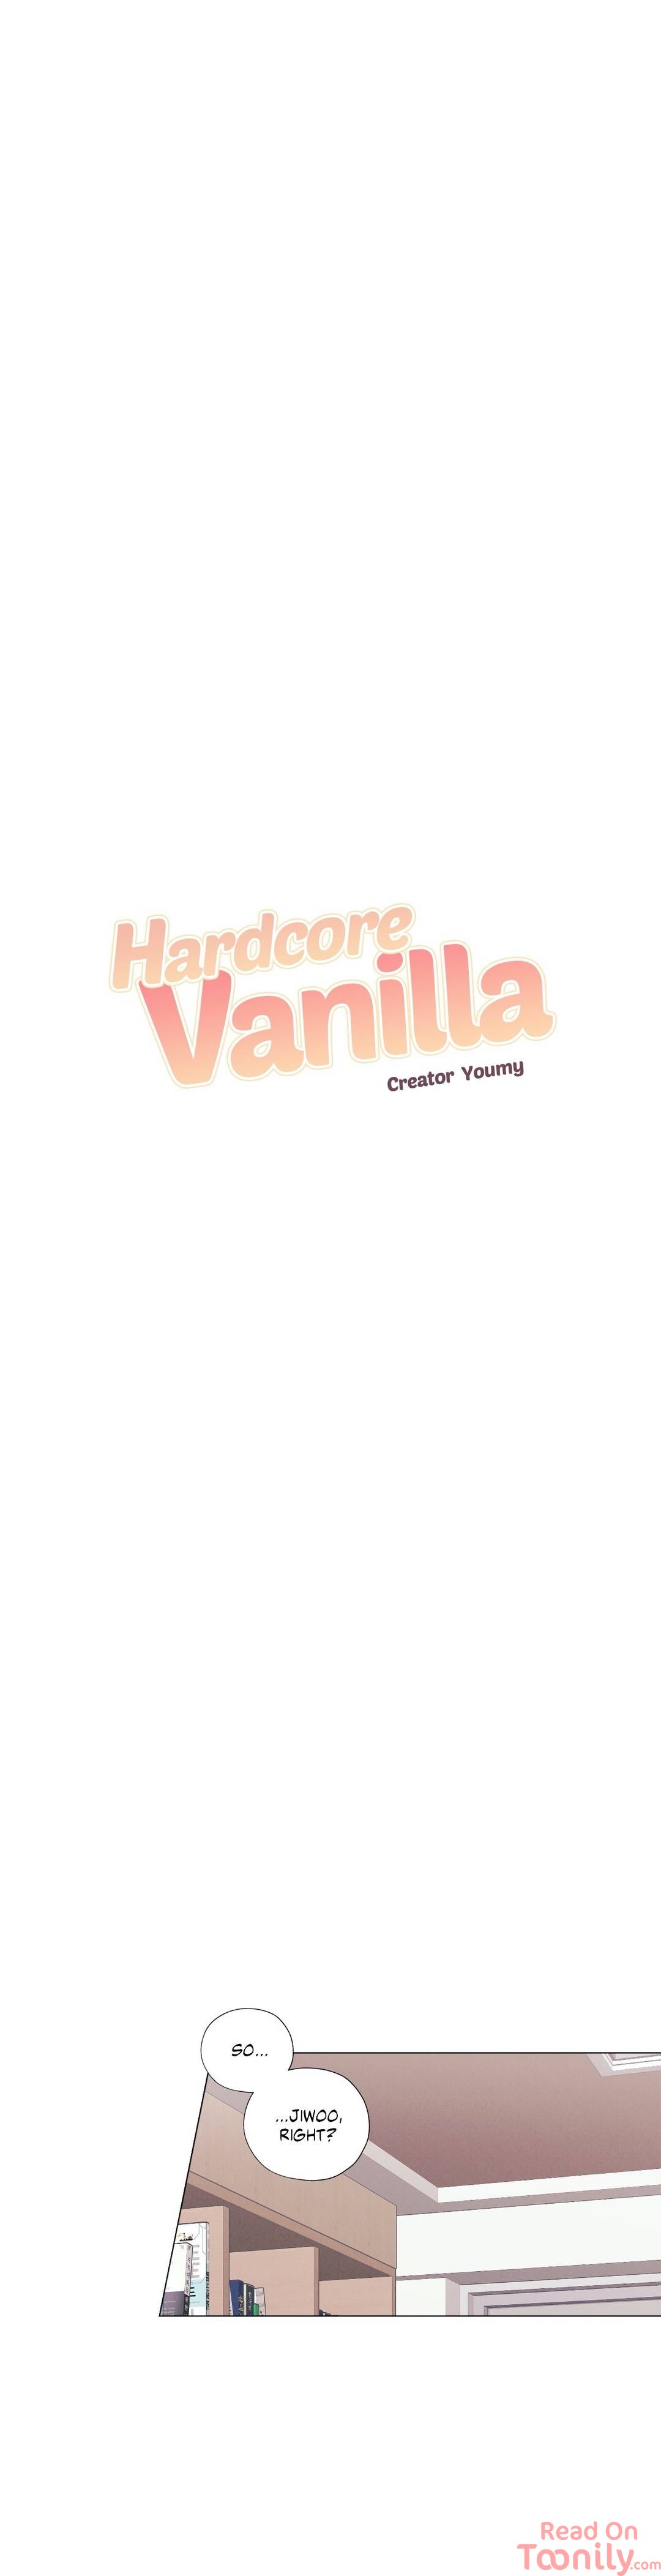 Hardcore Vanilla image